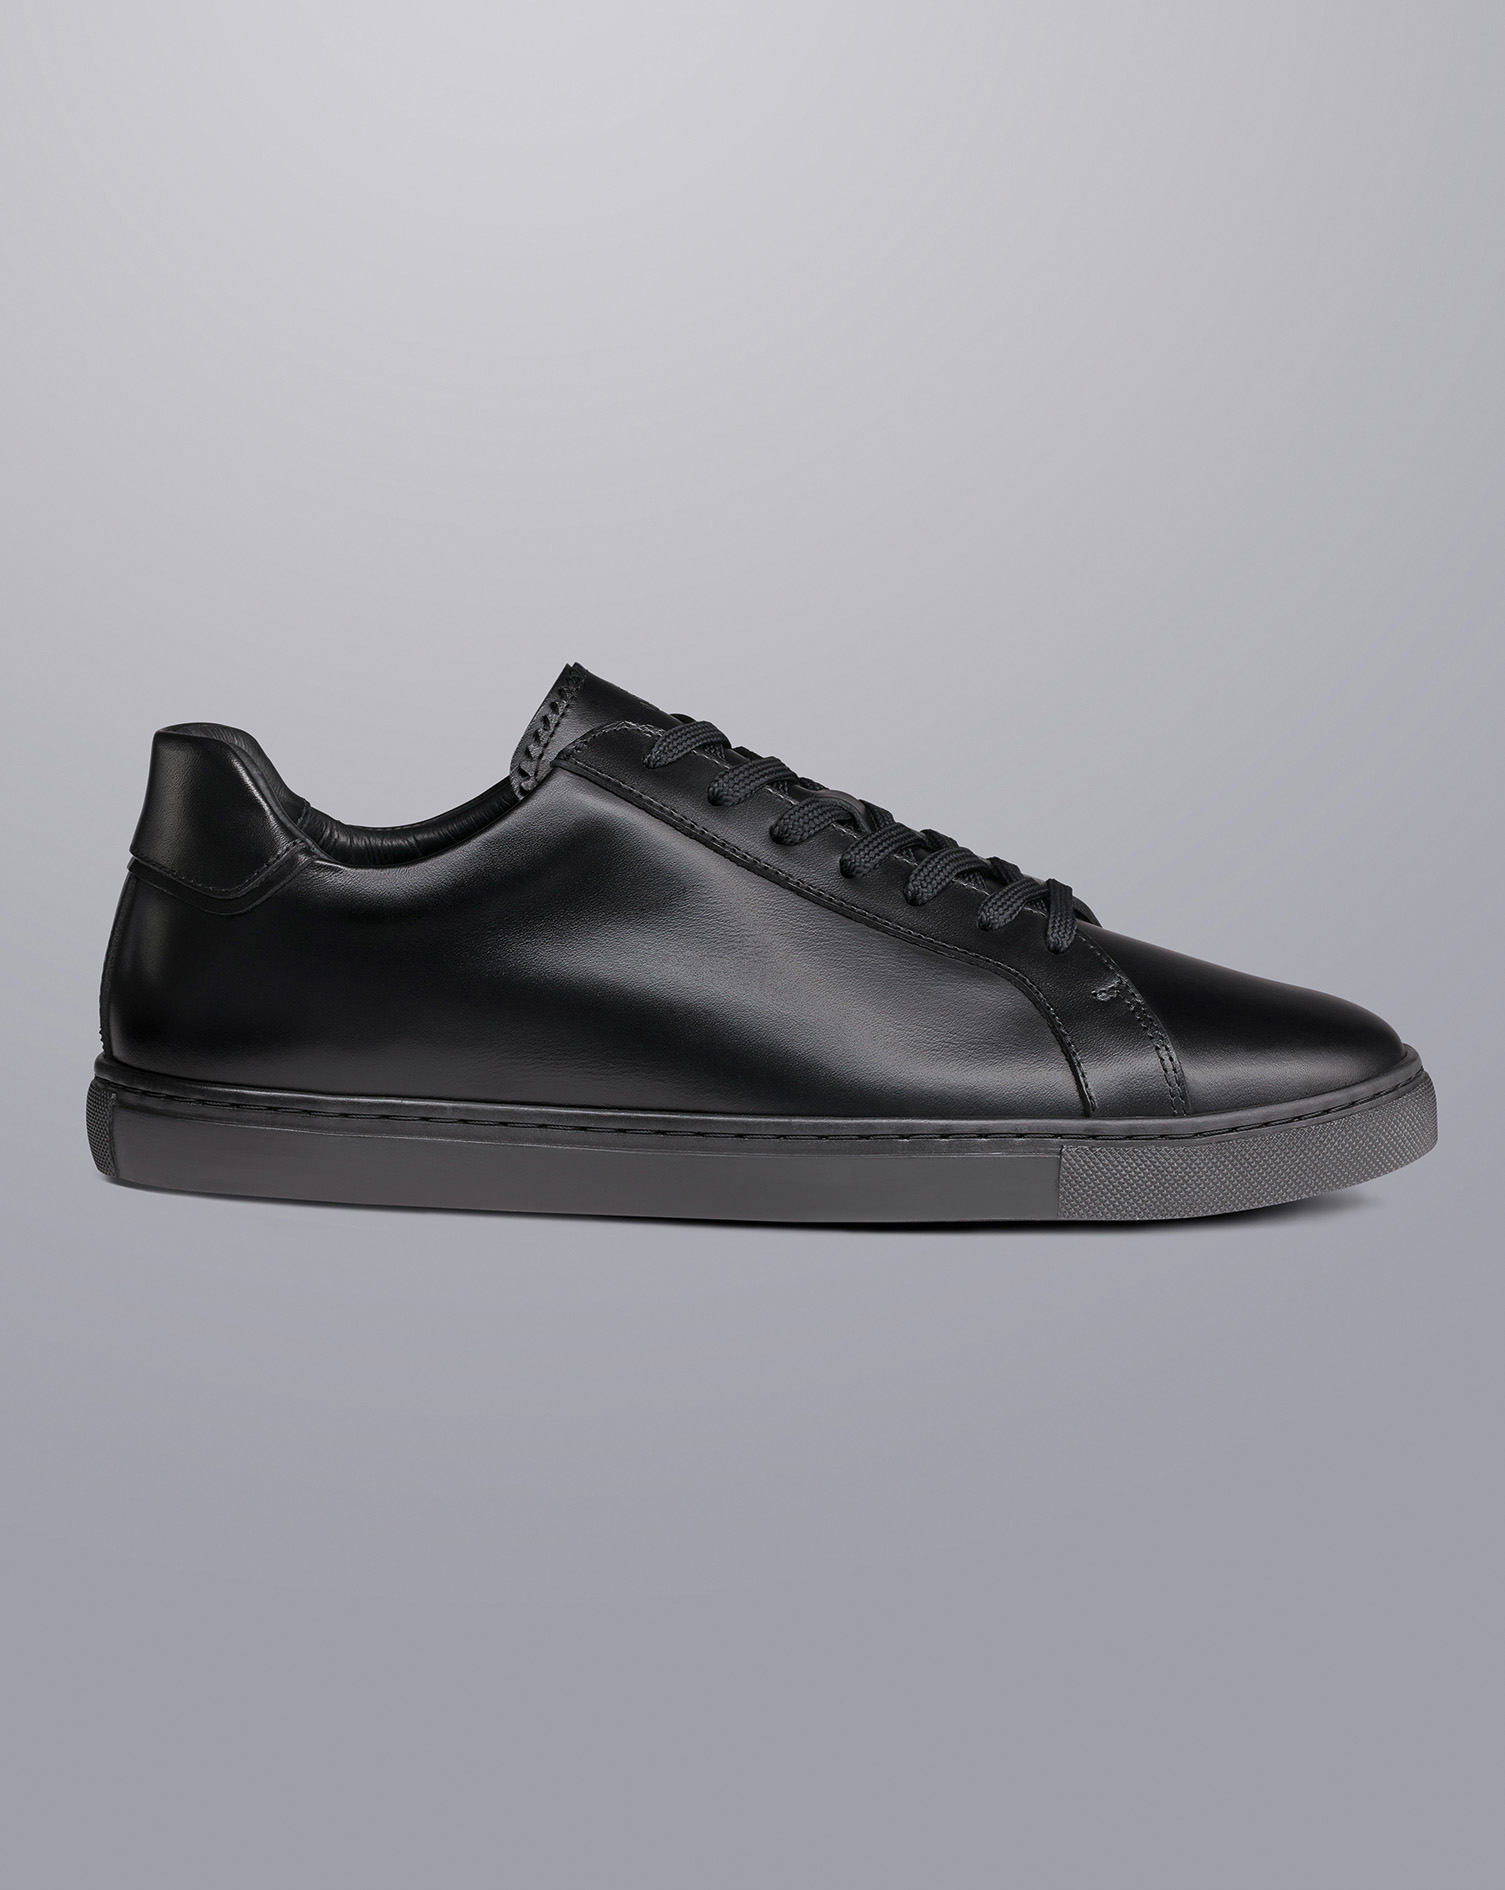 Men's Charles Tyrwhitt Leather Trainers - All Black Size 13
